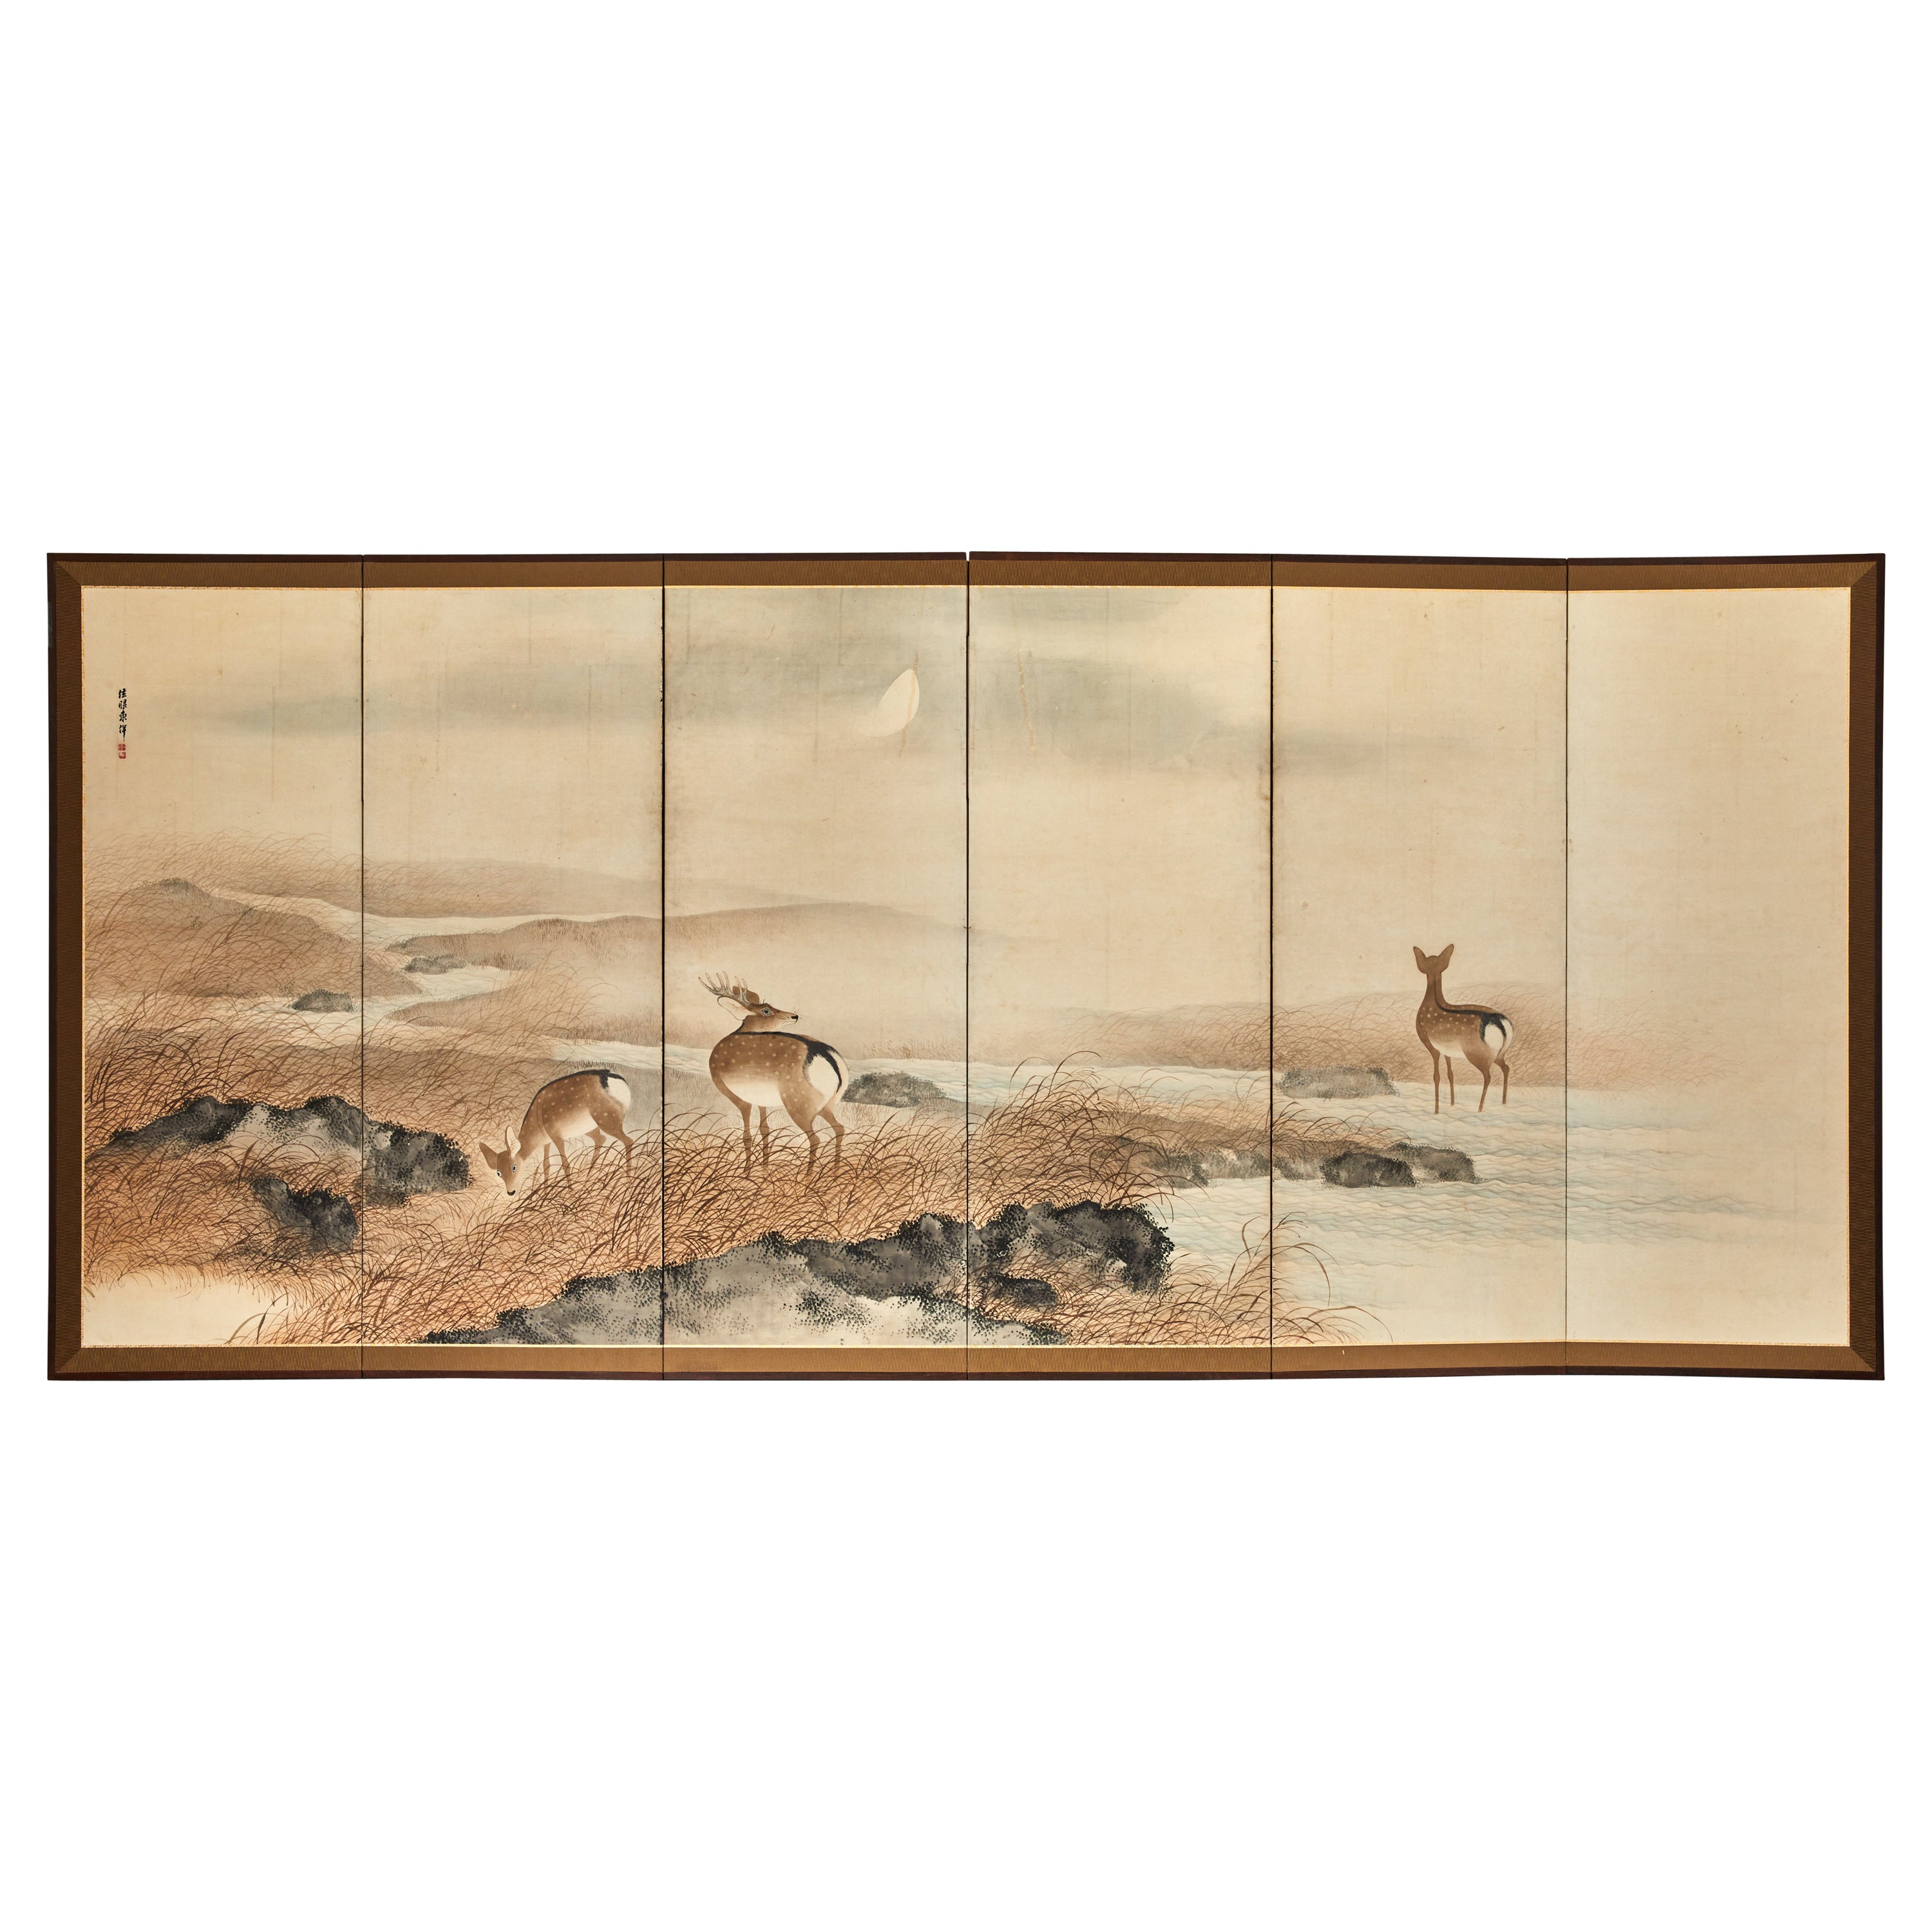 Japanese Six Panel Screen: Deer in Moonlit Water Landscape For Sale